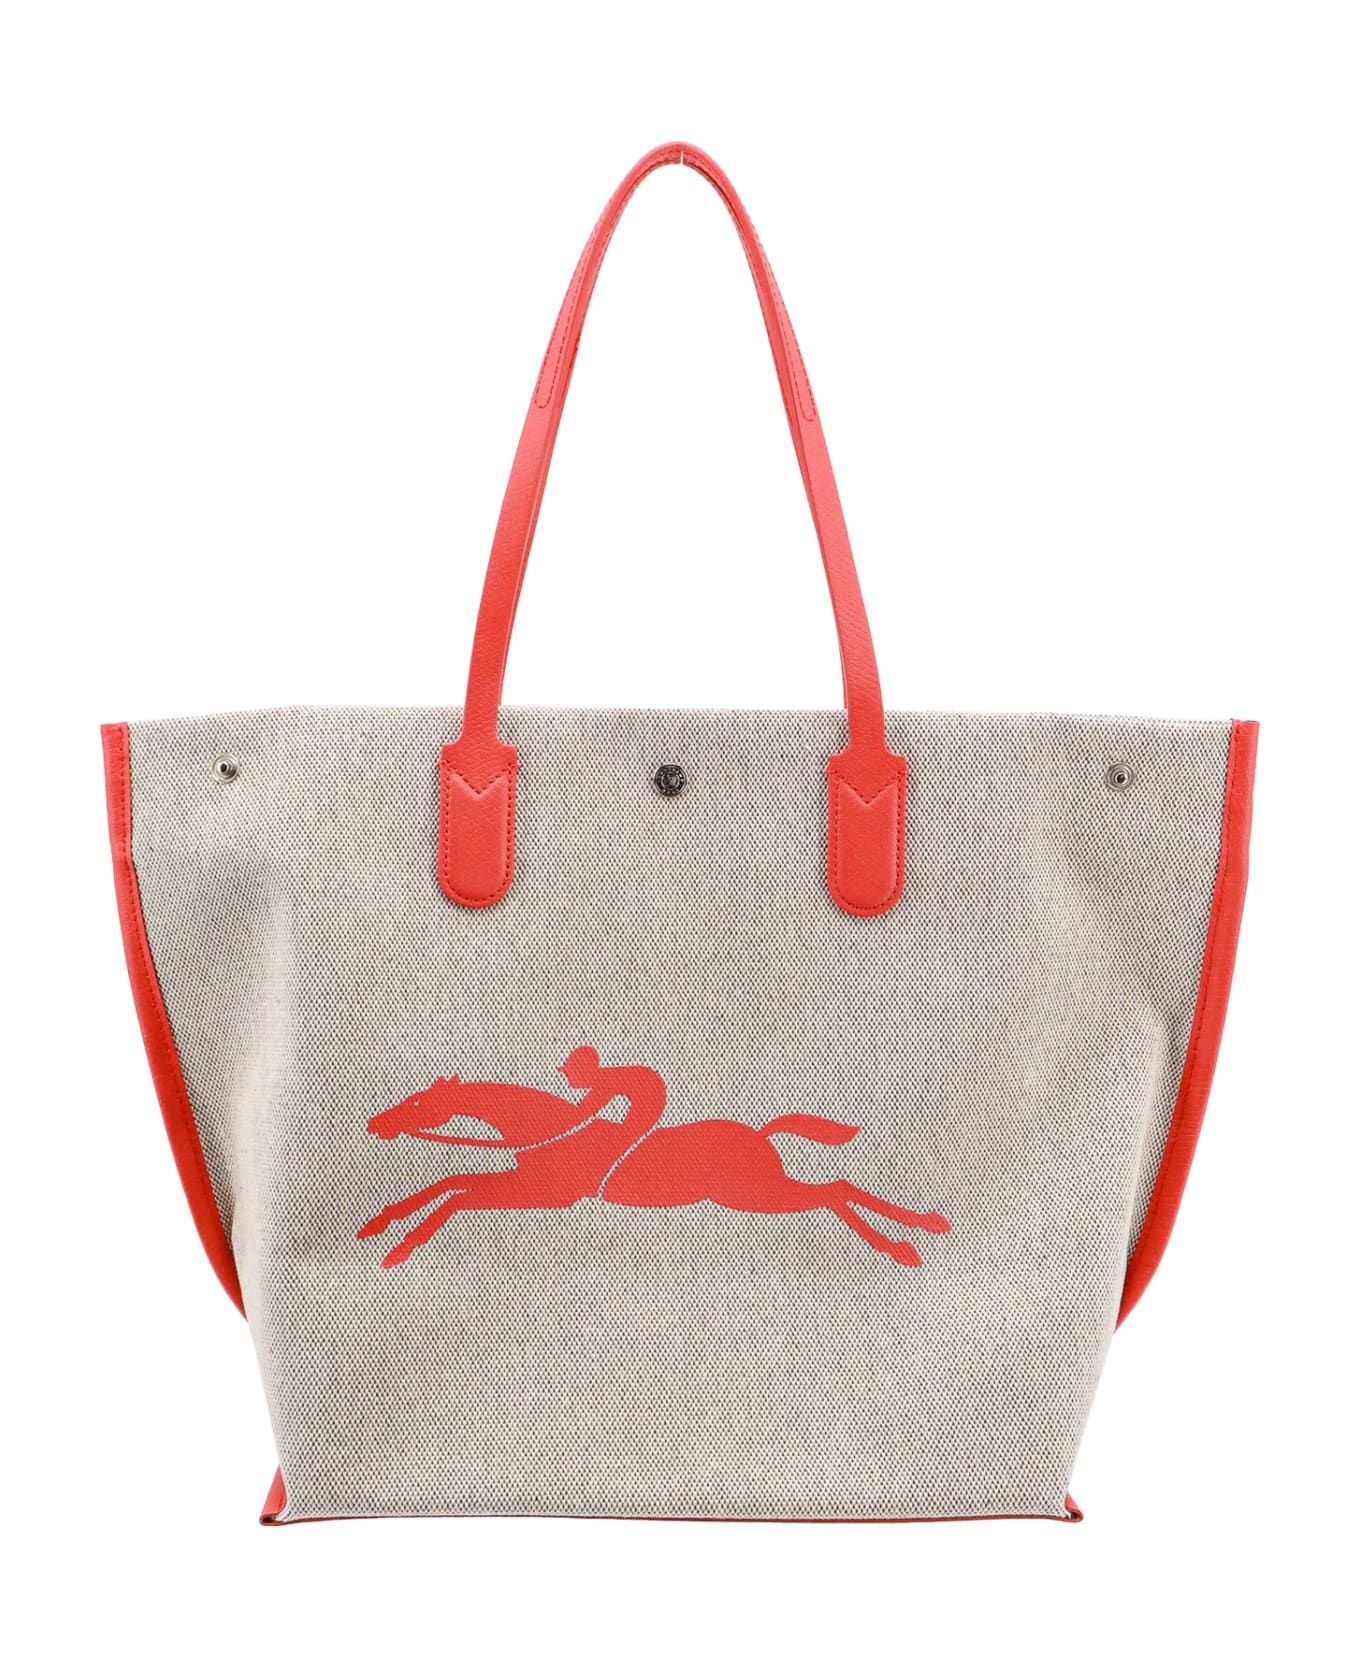 Longchamp Roseau Shoulder Bag - Coral